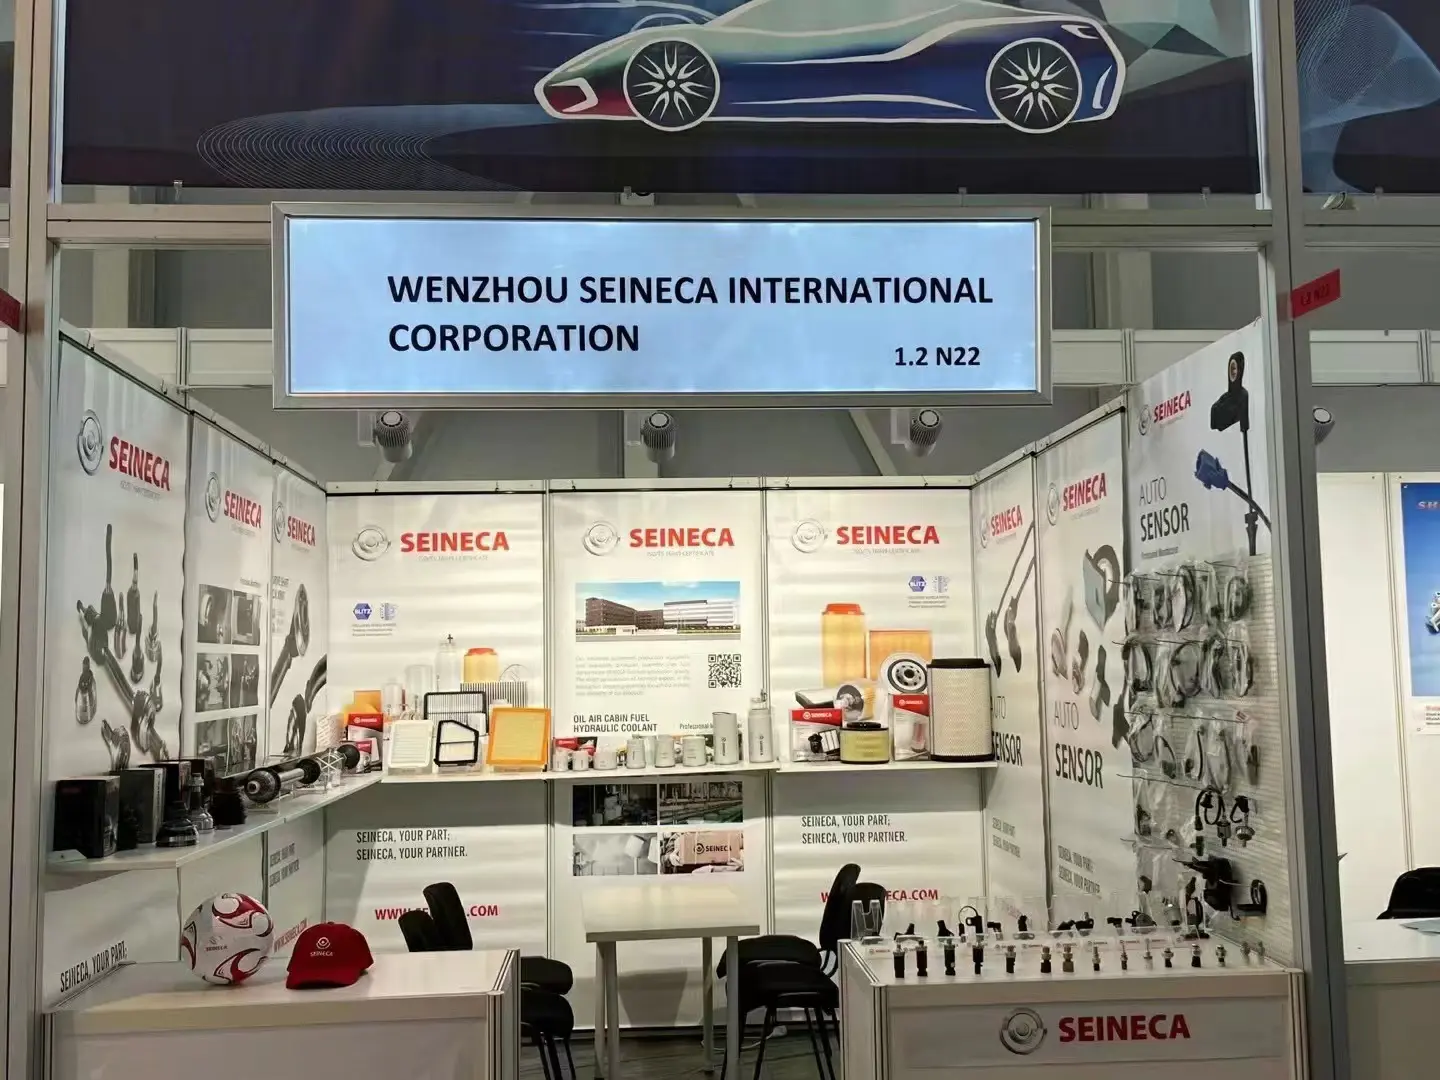 SEINECA Automotive Automechanika Fankfurt 2022 Booth #.1.2N22  